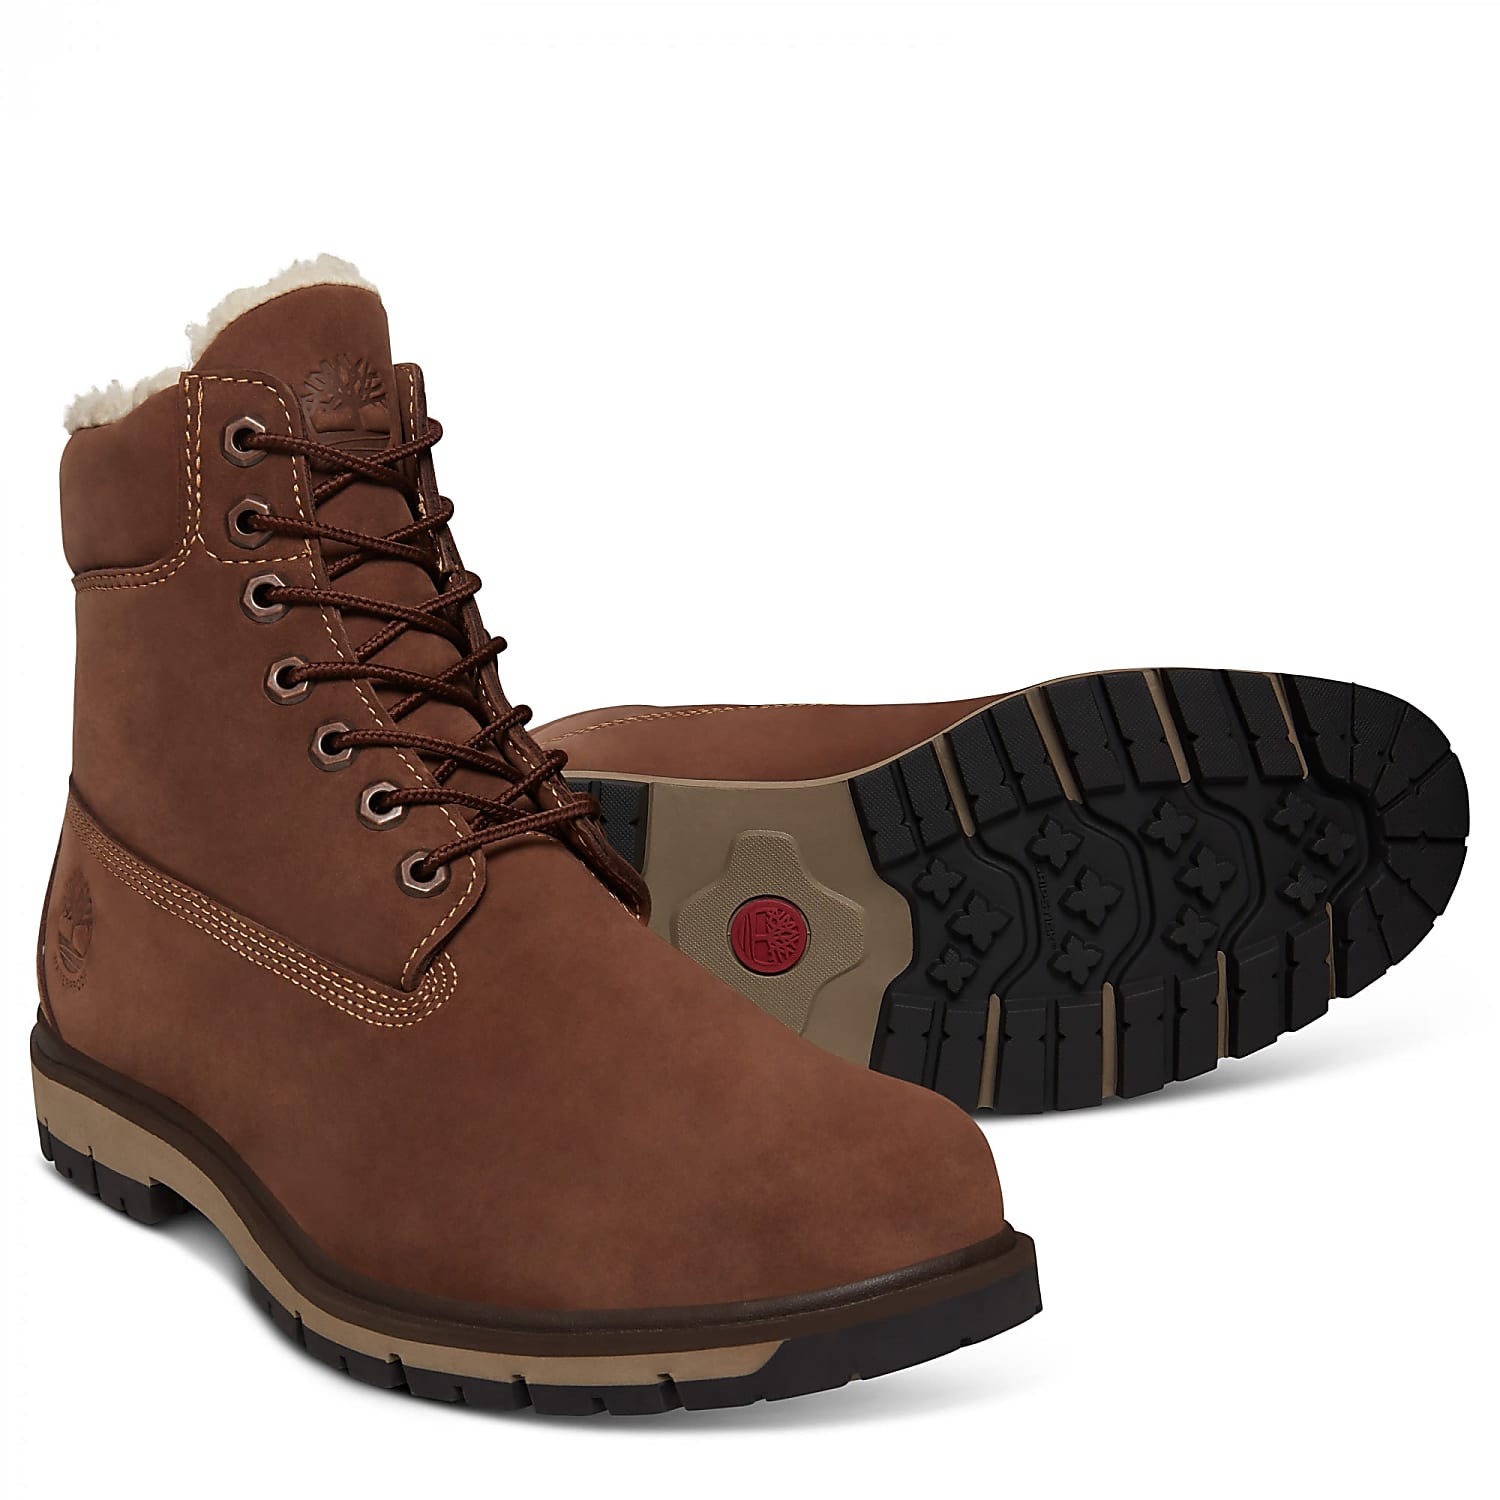 timberland radford warm lined boots